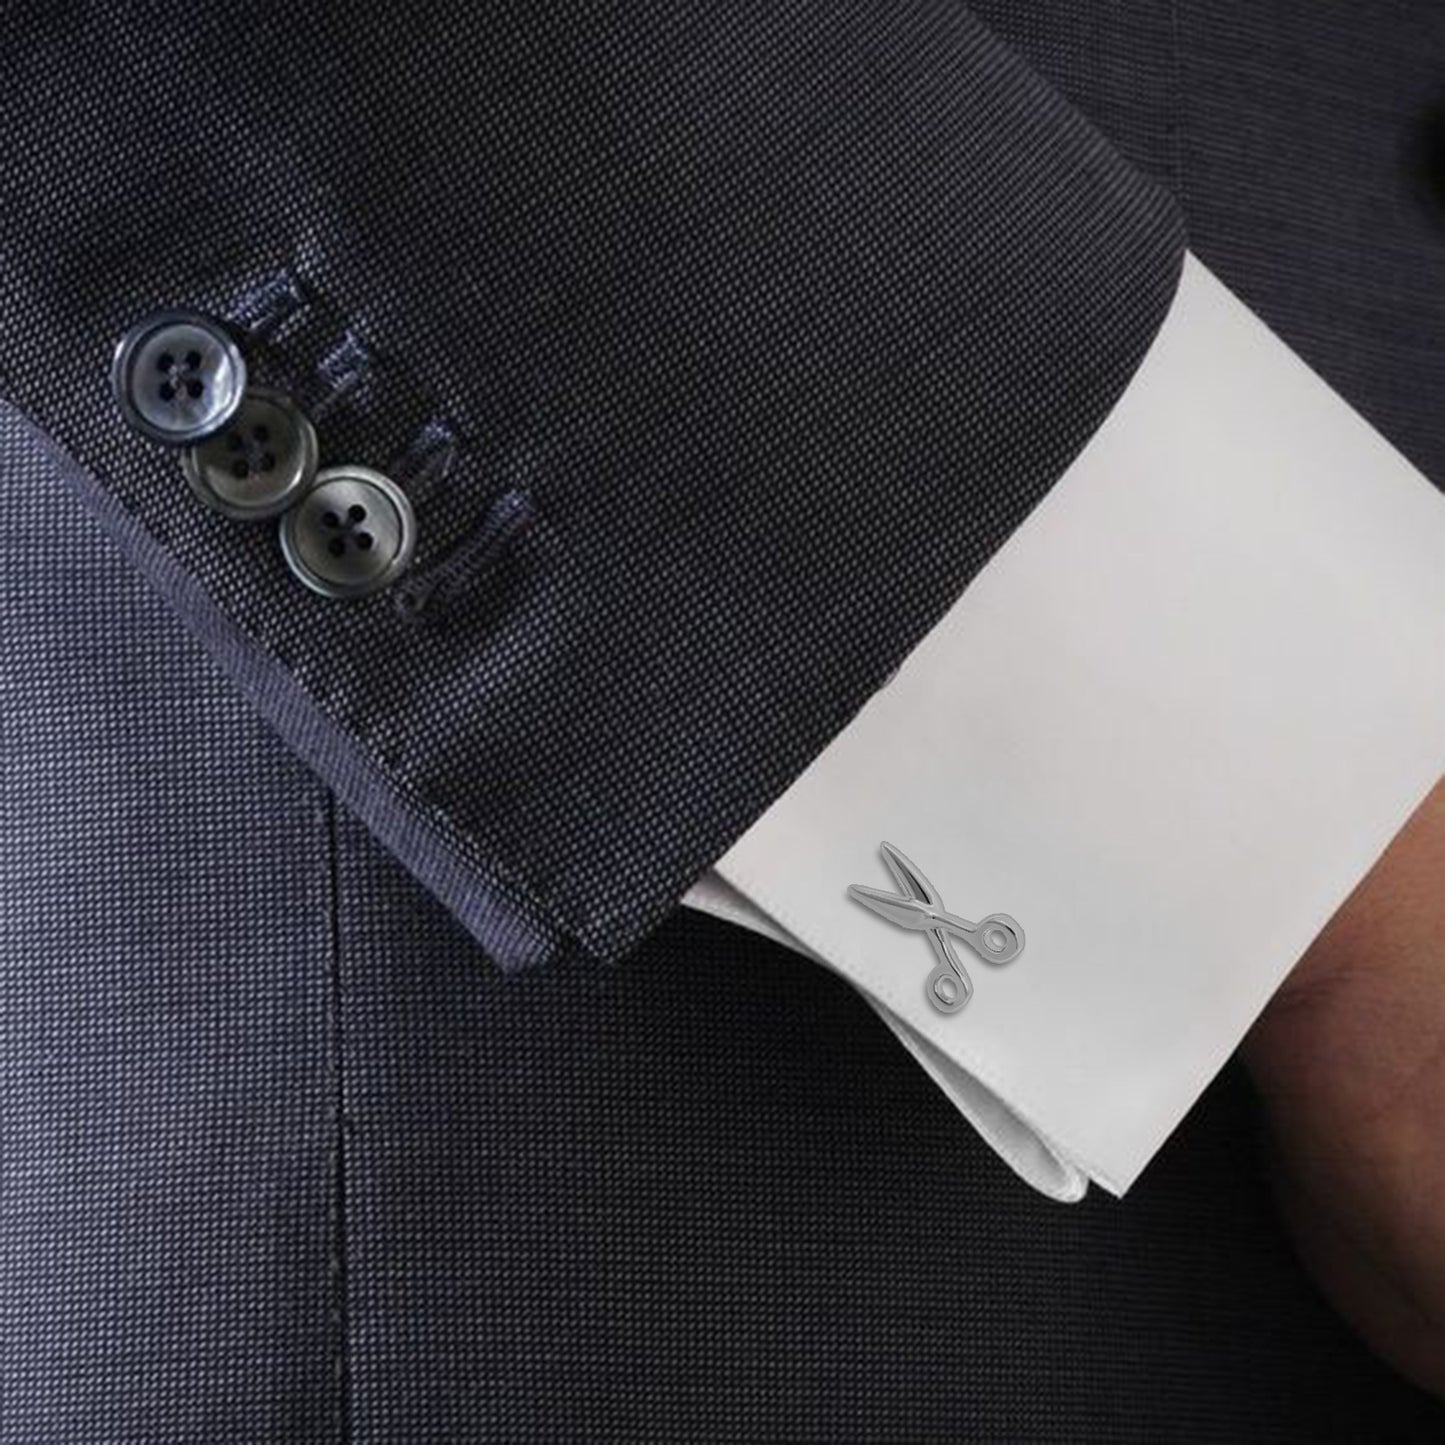 Scissors Cufflinks For Men With Gift Box